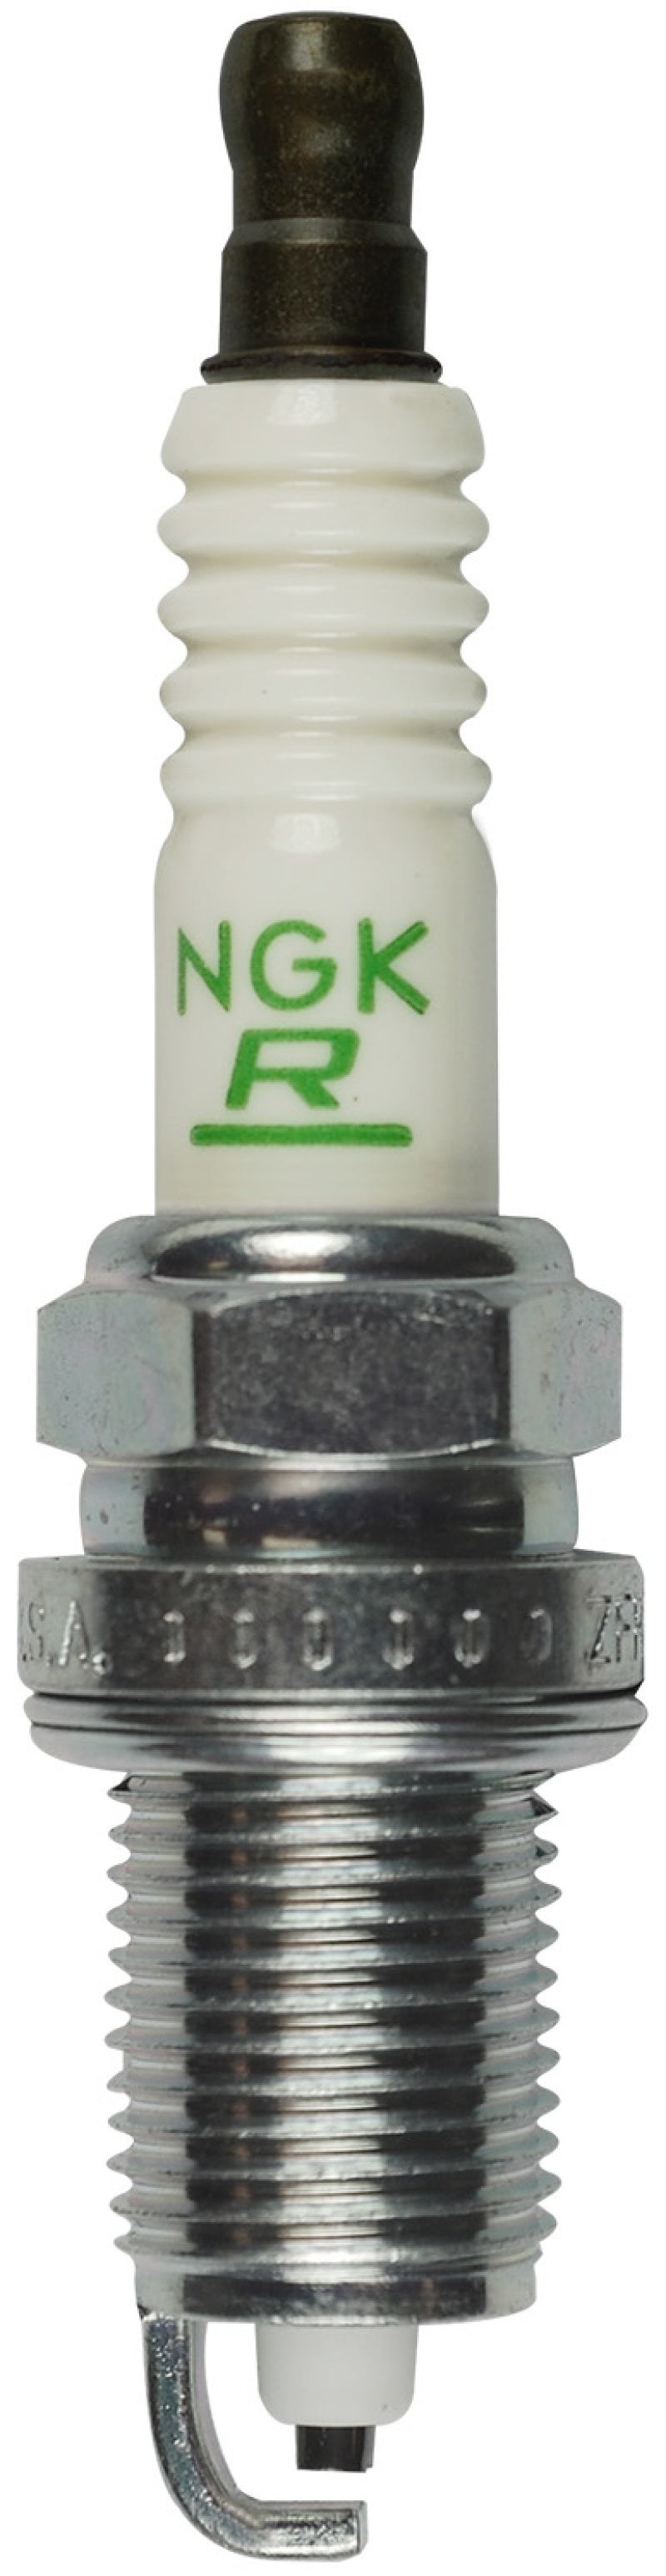 NGK V-Power Spark Plug Box of 4 (ZFR6F-11)